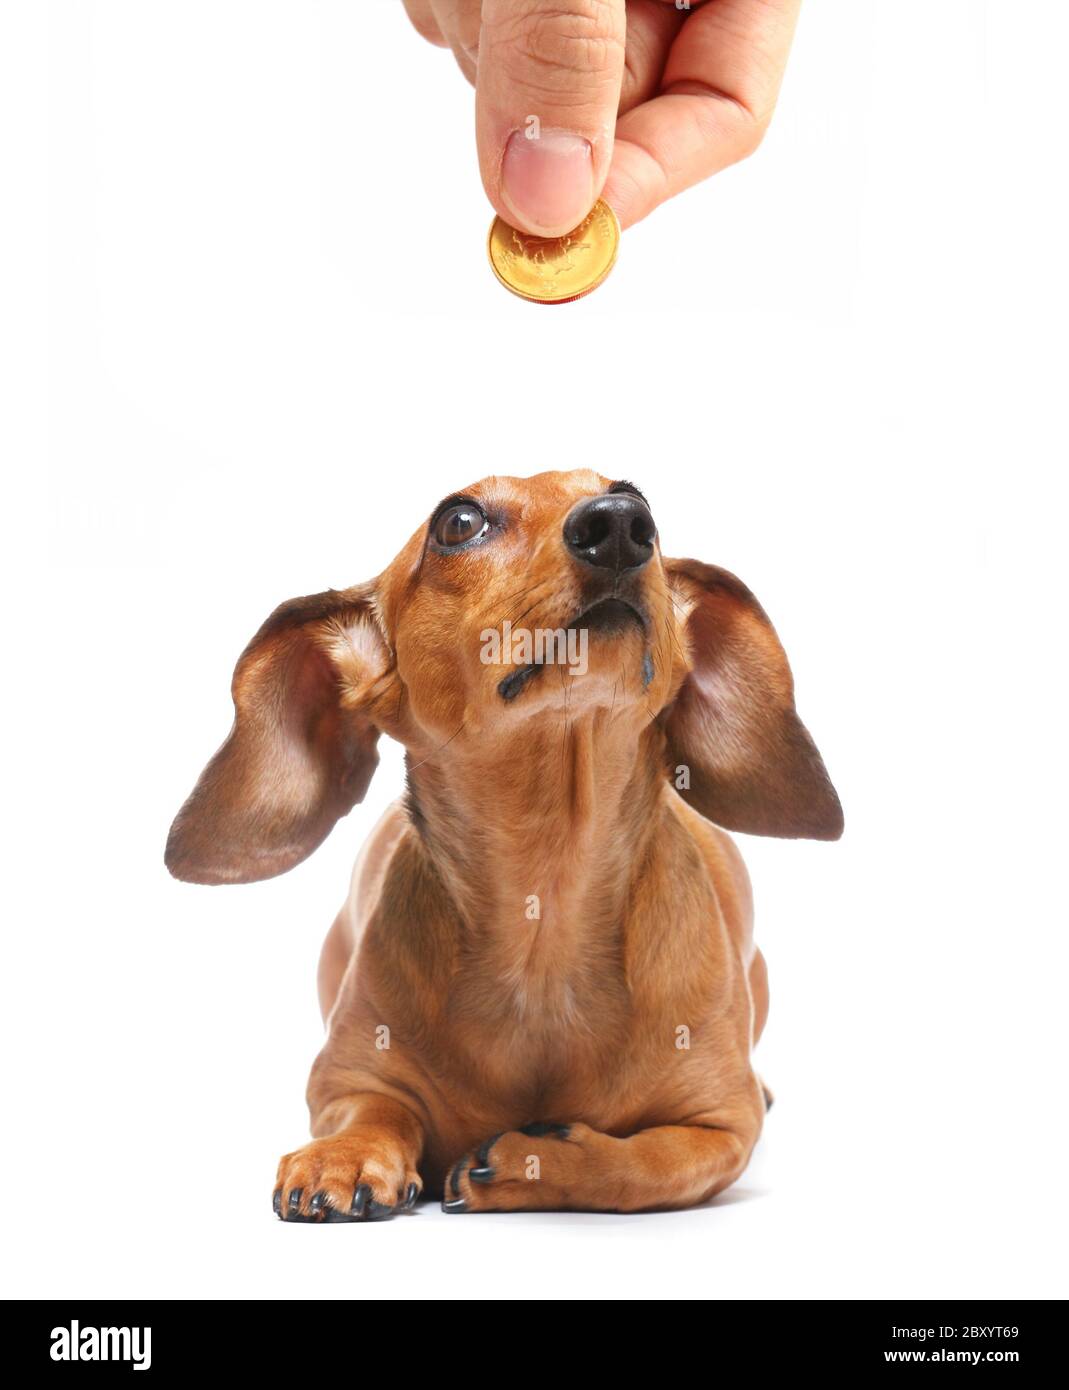 dachshund dog looking to money Stock Photo